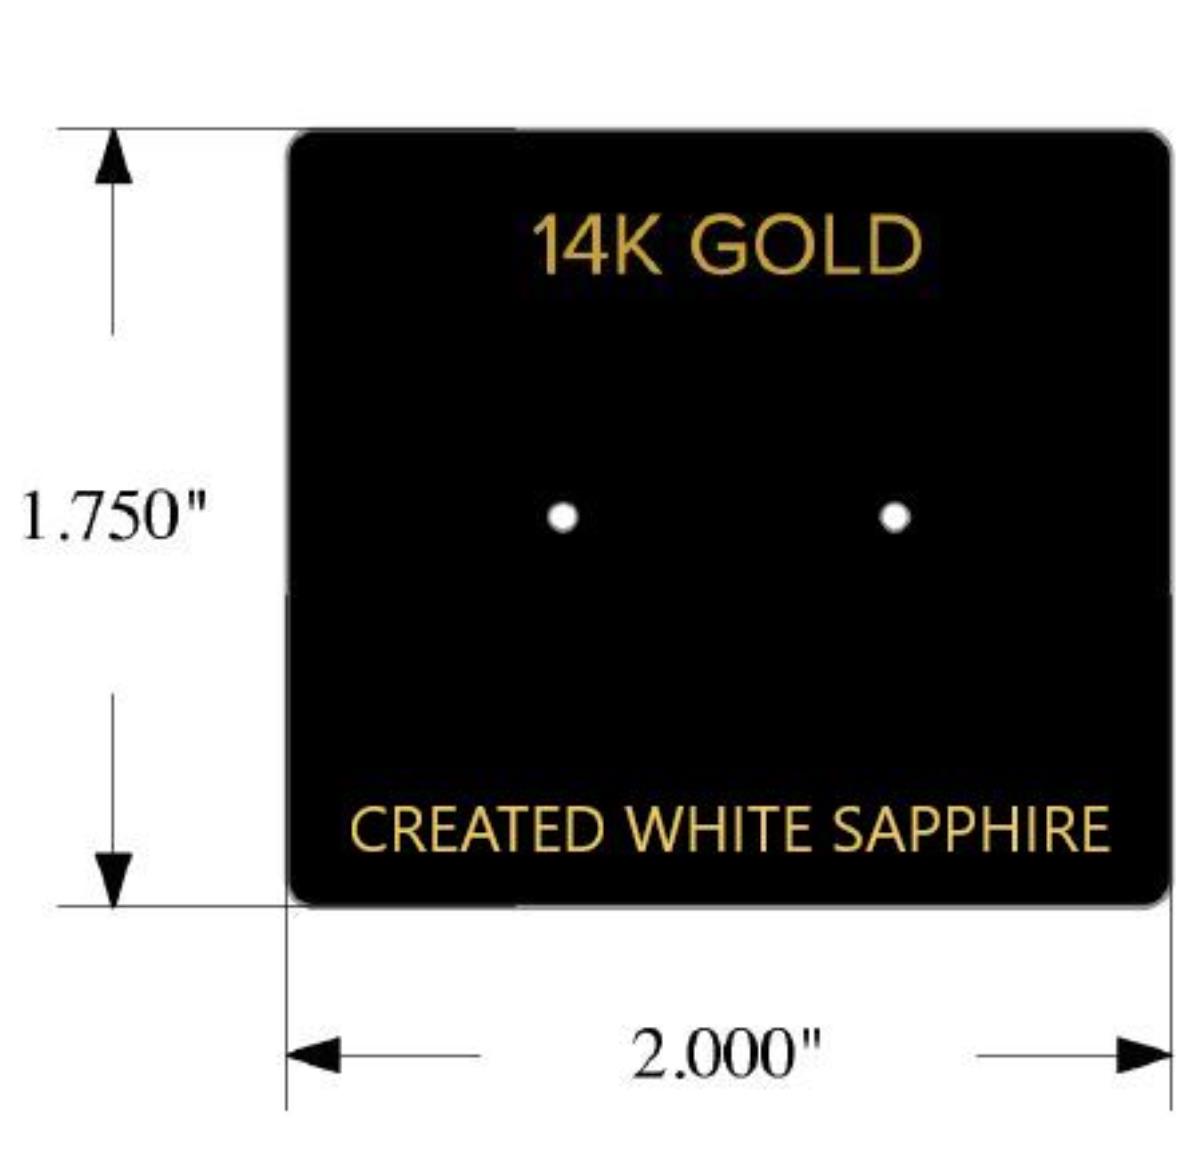 14K Gold 2.00x1.75" Black Single Stud Card (Created White Sapphire)